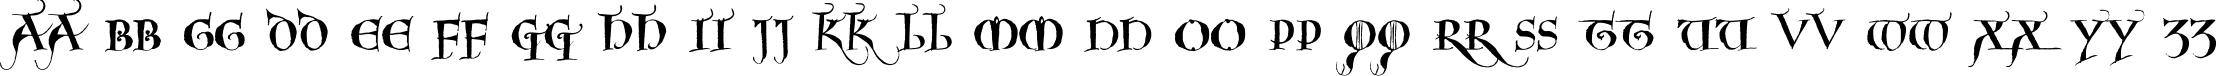 Пример написания английского алфавита шрифтом NoelBlack